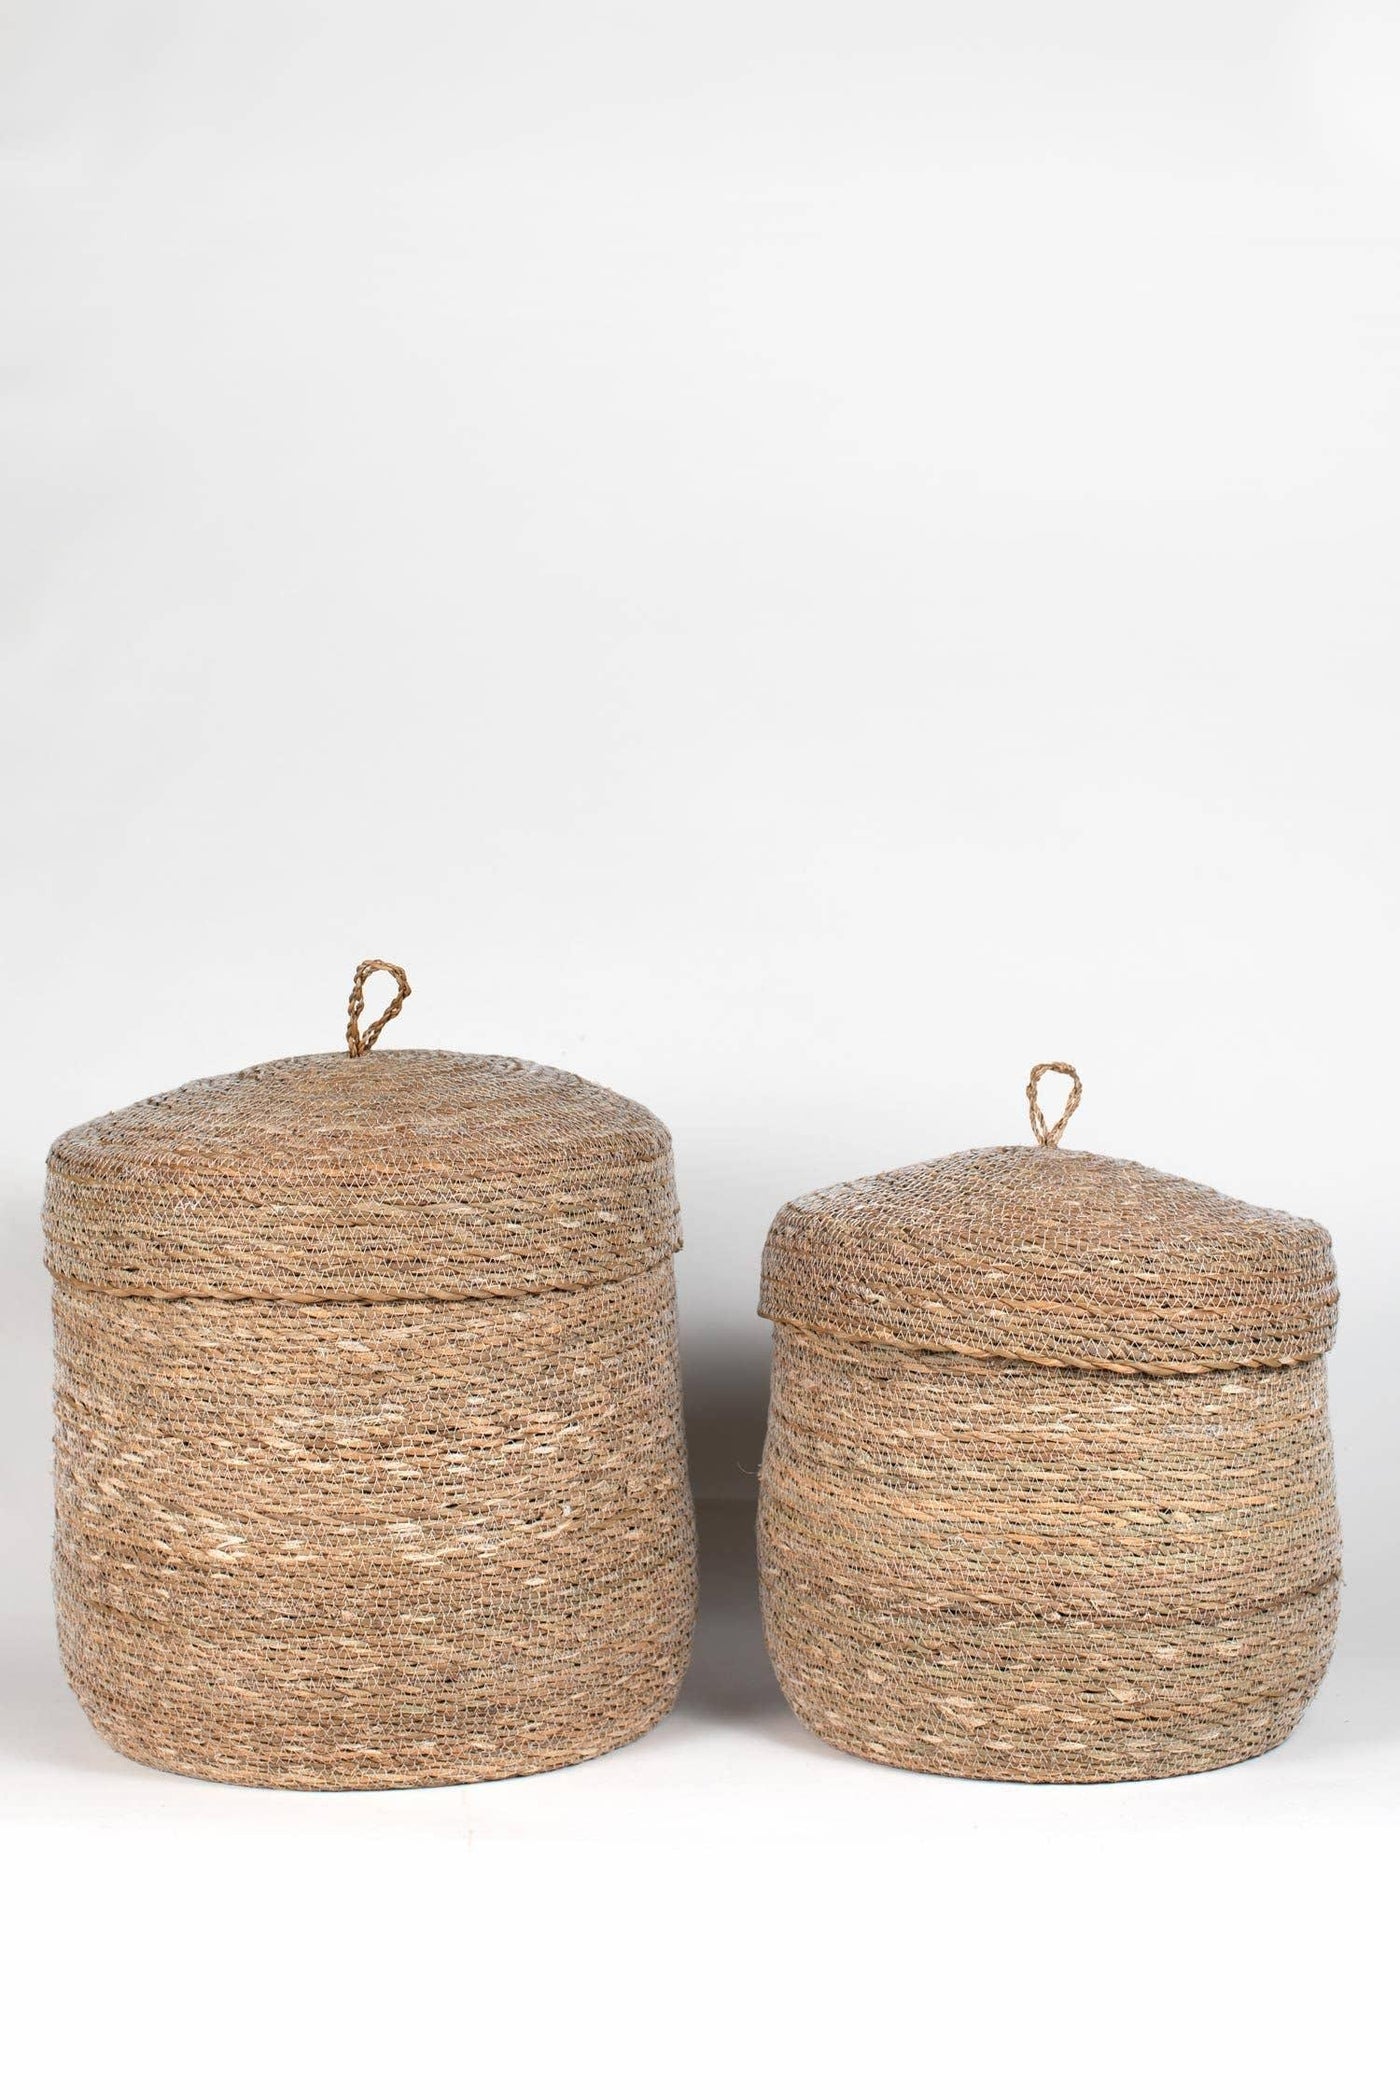 Stitched Hogla Basket - Birch and Bind